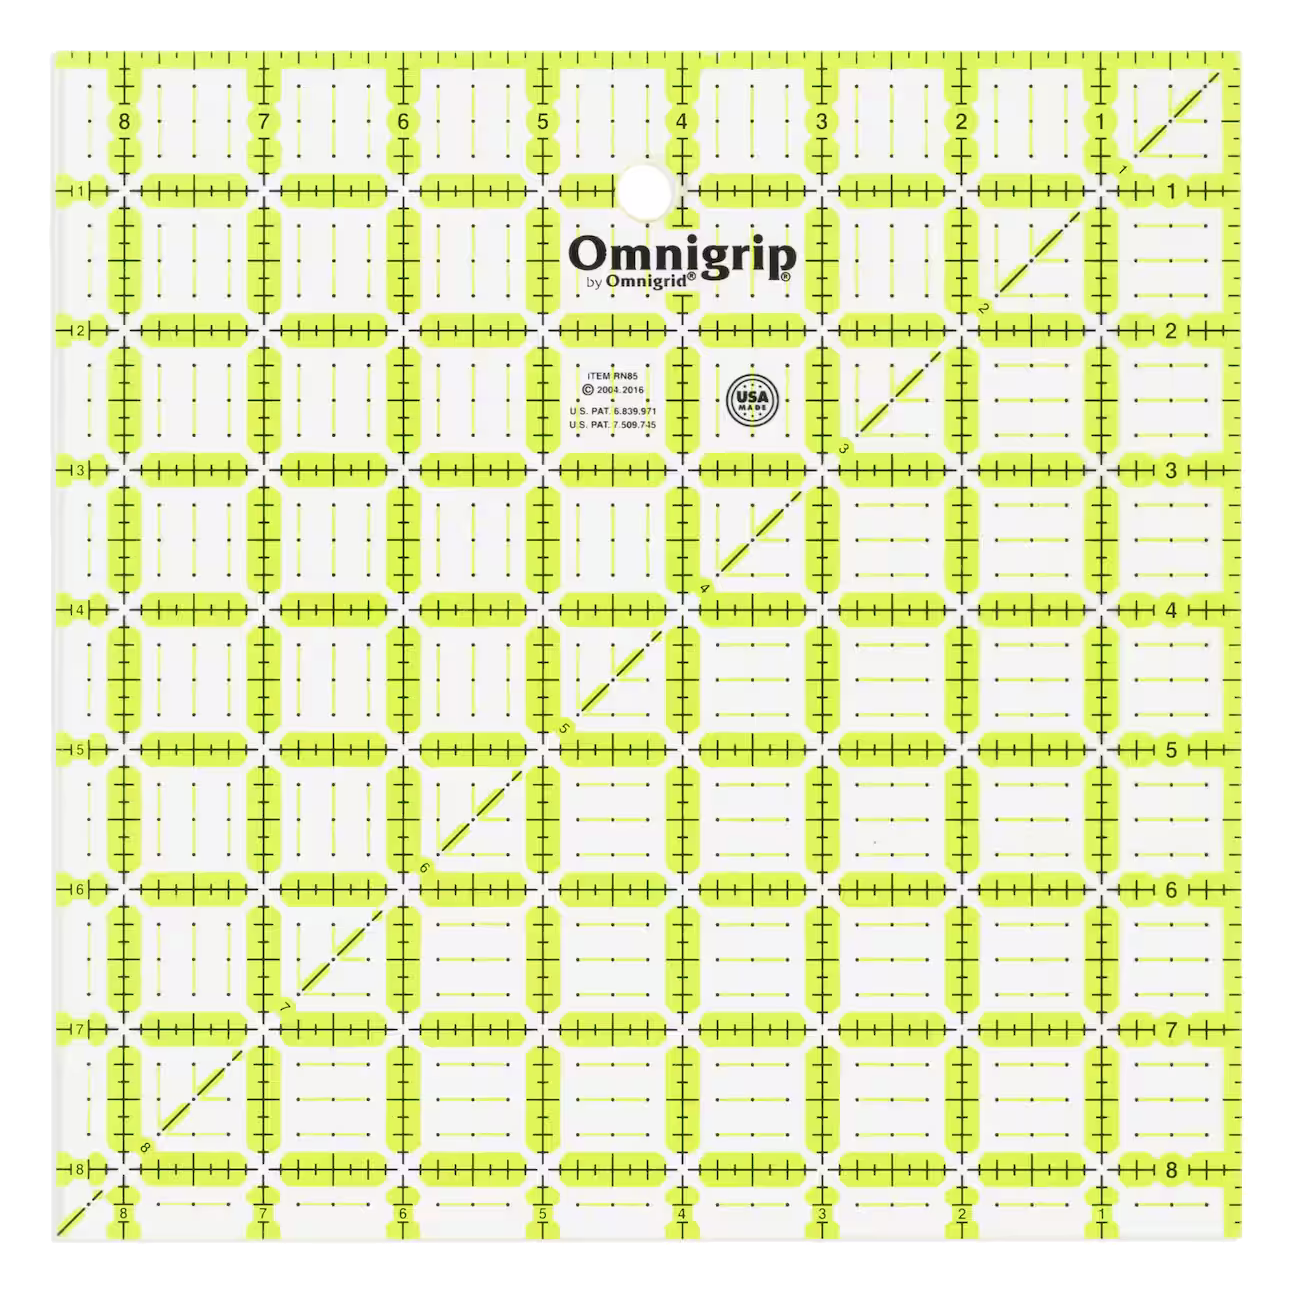 Omnigrip by Omnigrid Square 8.5-inch ruler